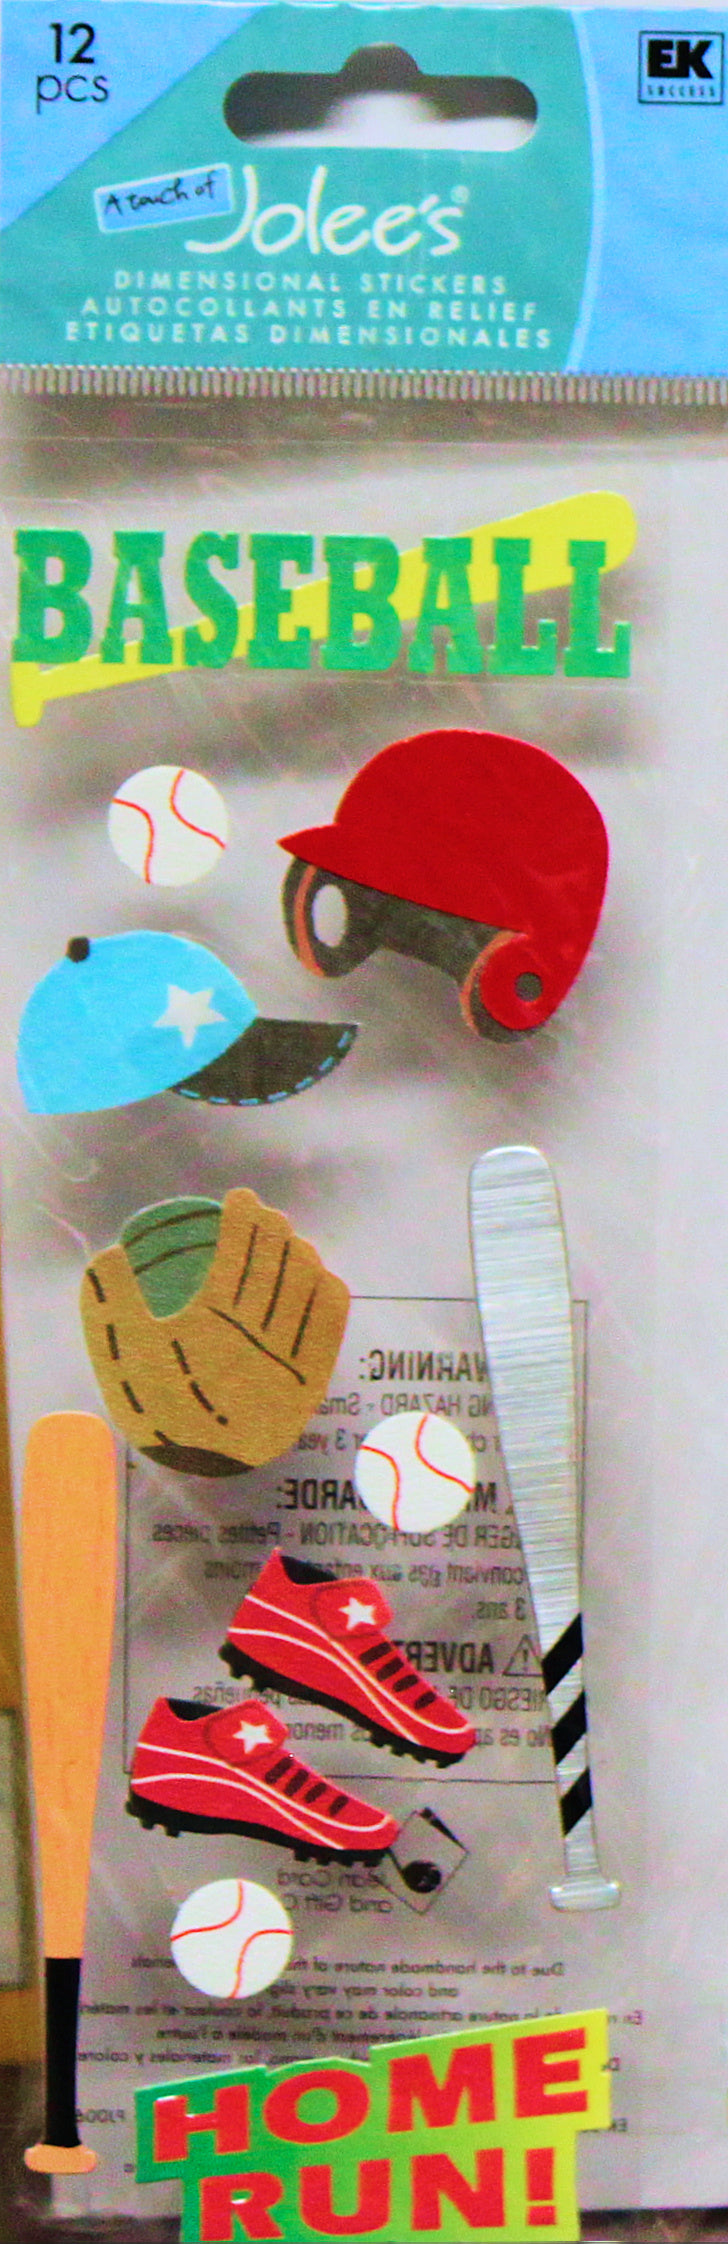 Jolee's Boutique Baseball Dimensional Sticker